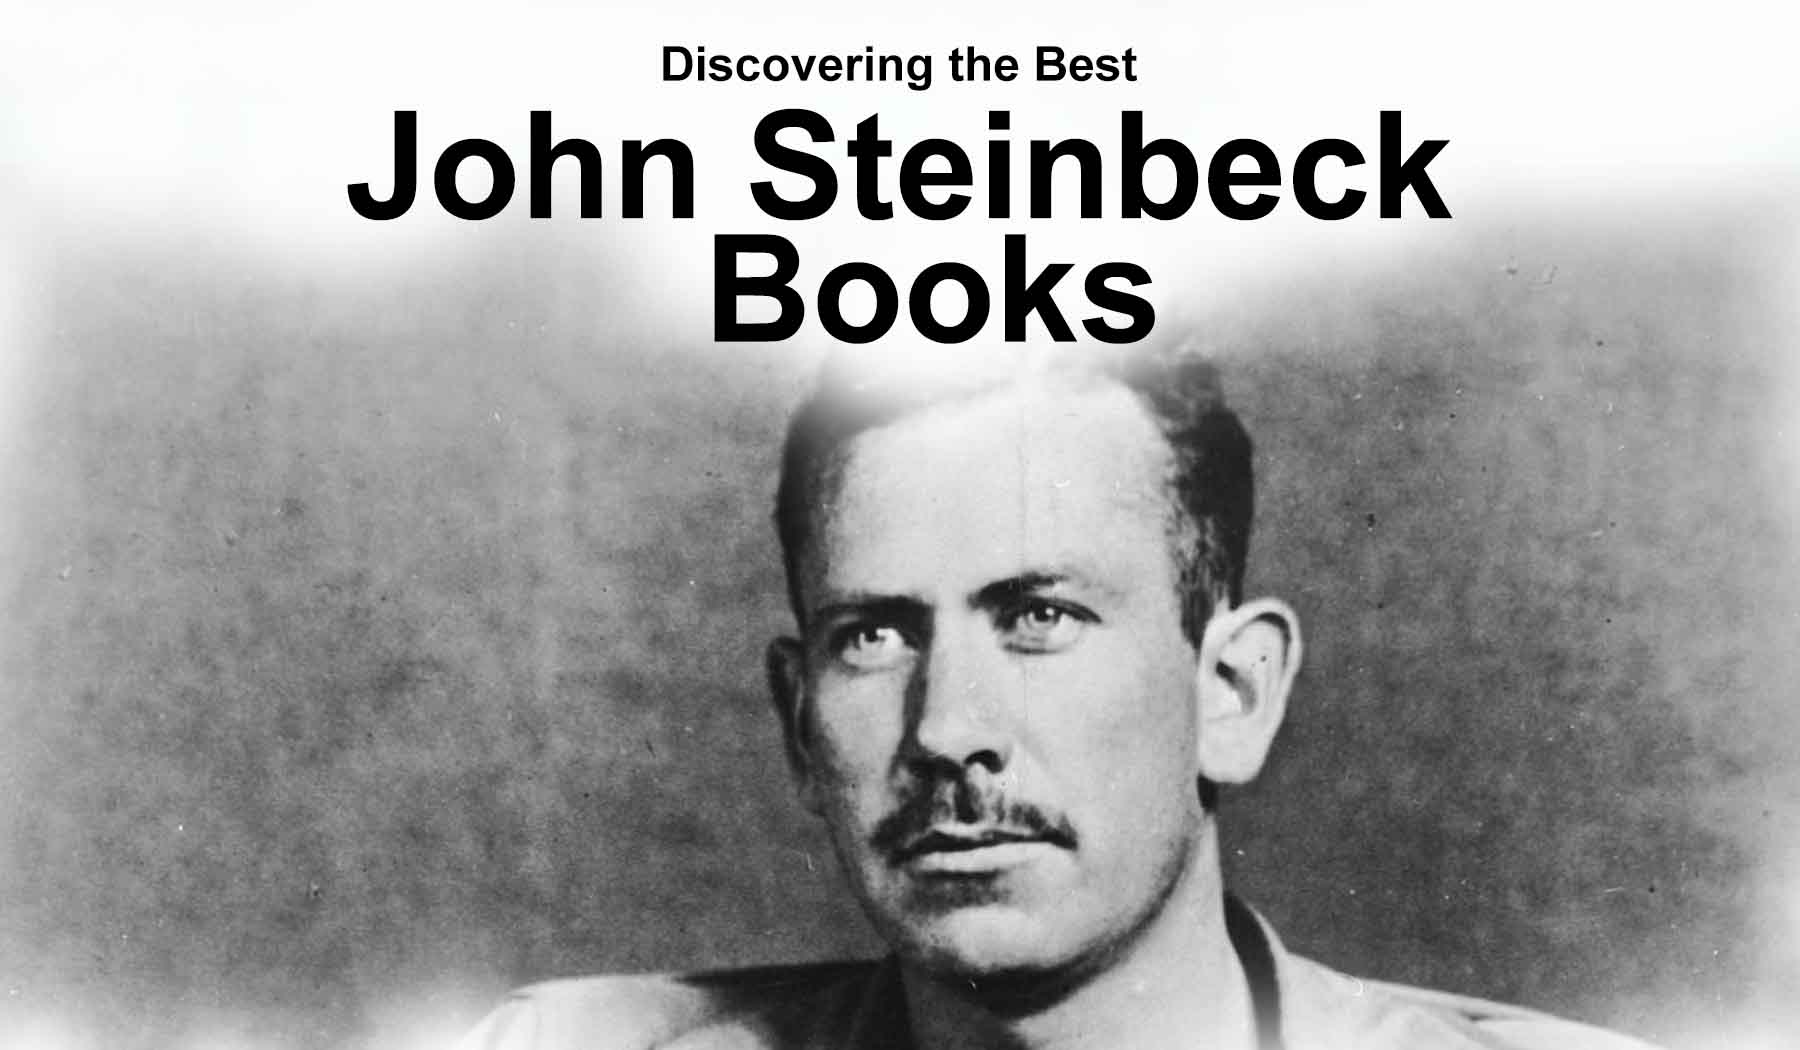 The Best John Steinbeck Books